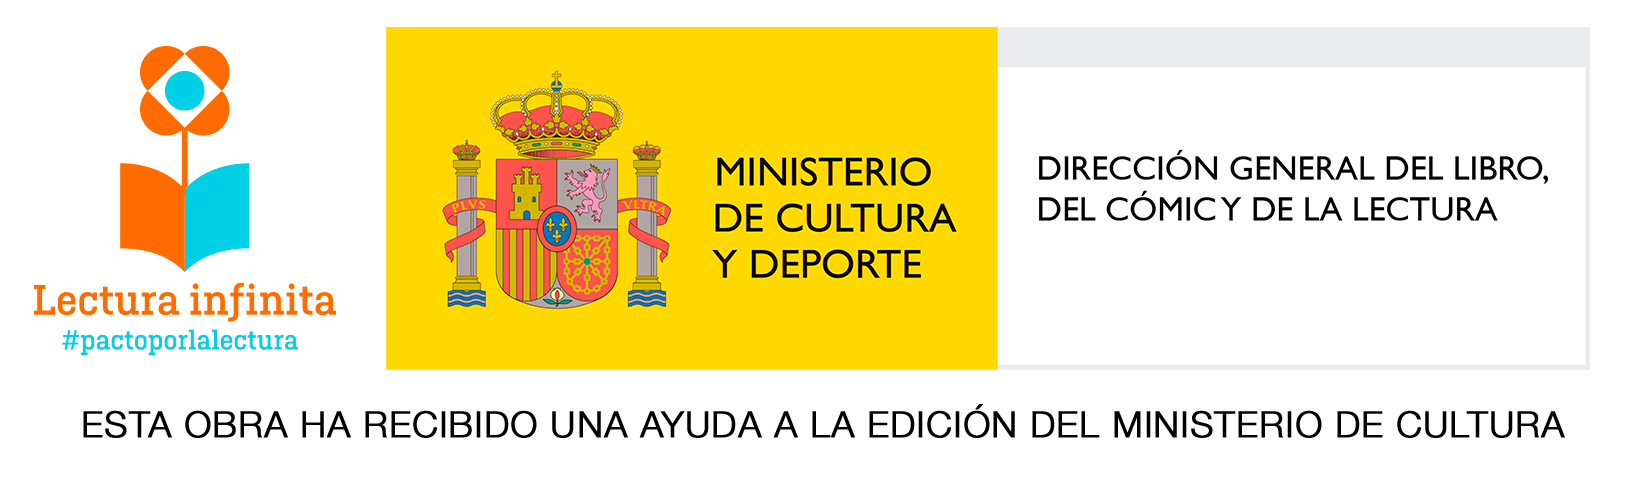 Ministerio de cultura